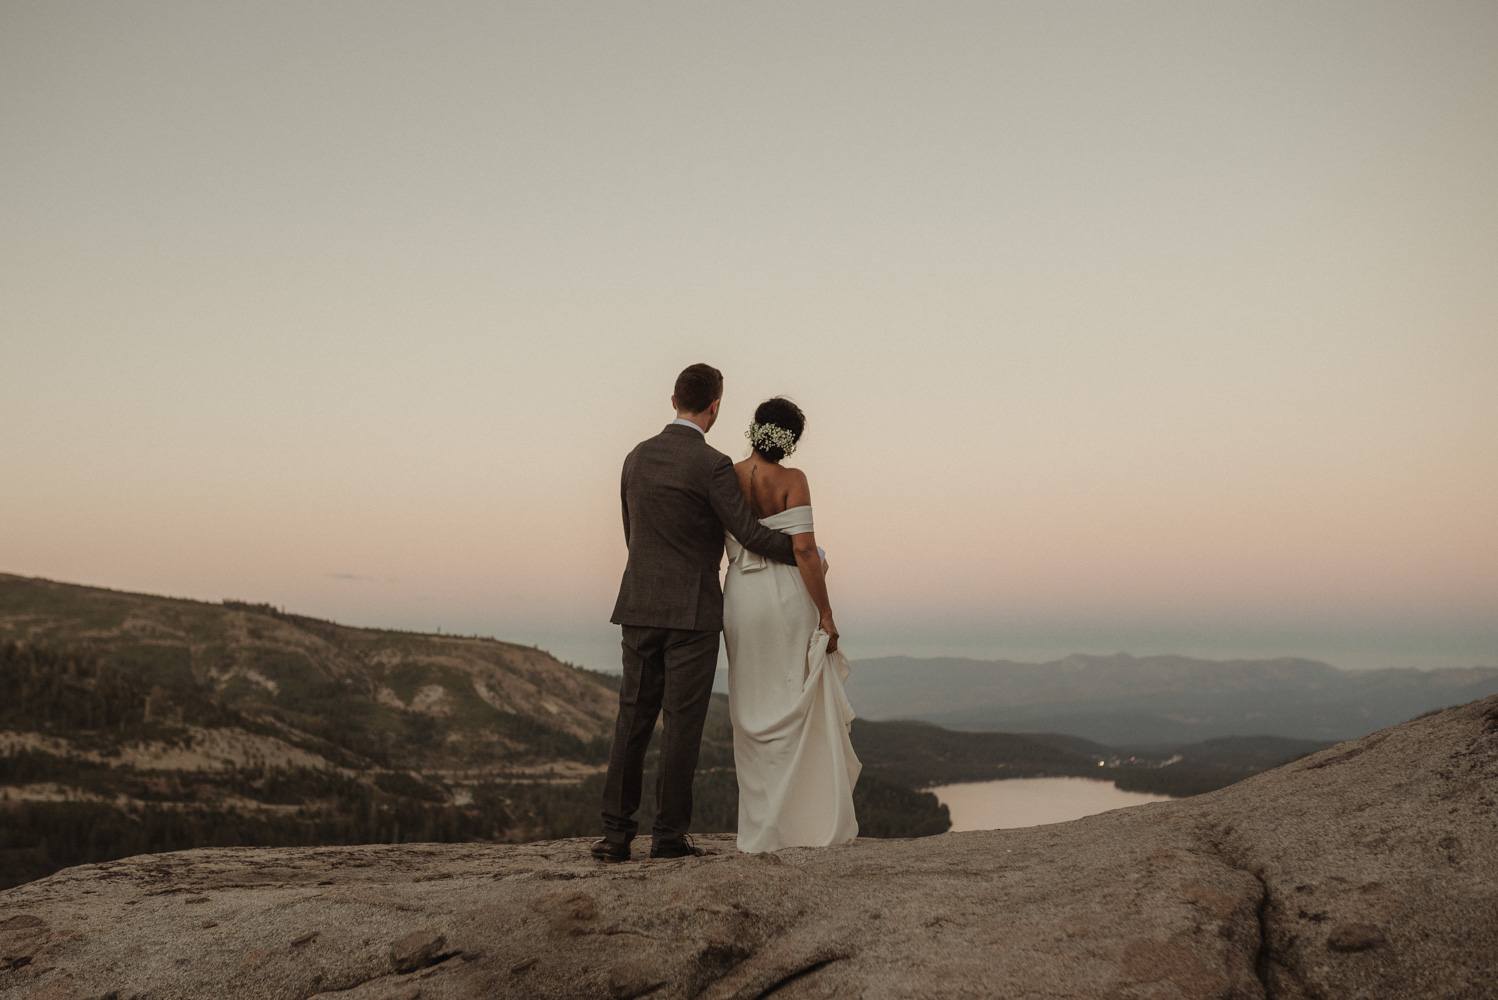 Lake Tahoe pop-up wedding/elopement couple enjoying the last light of sunset photo